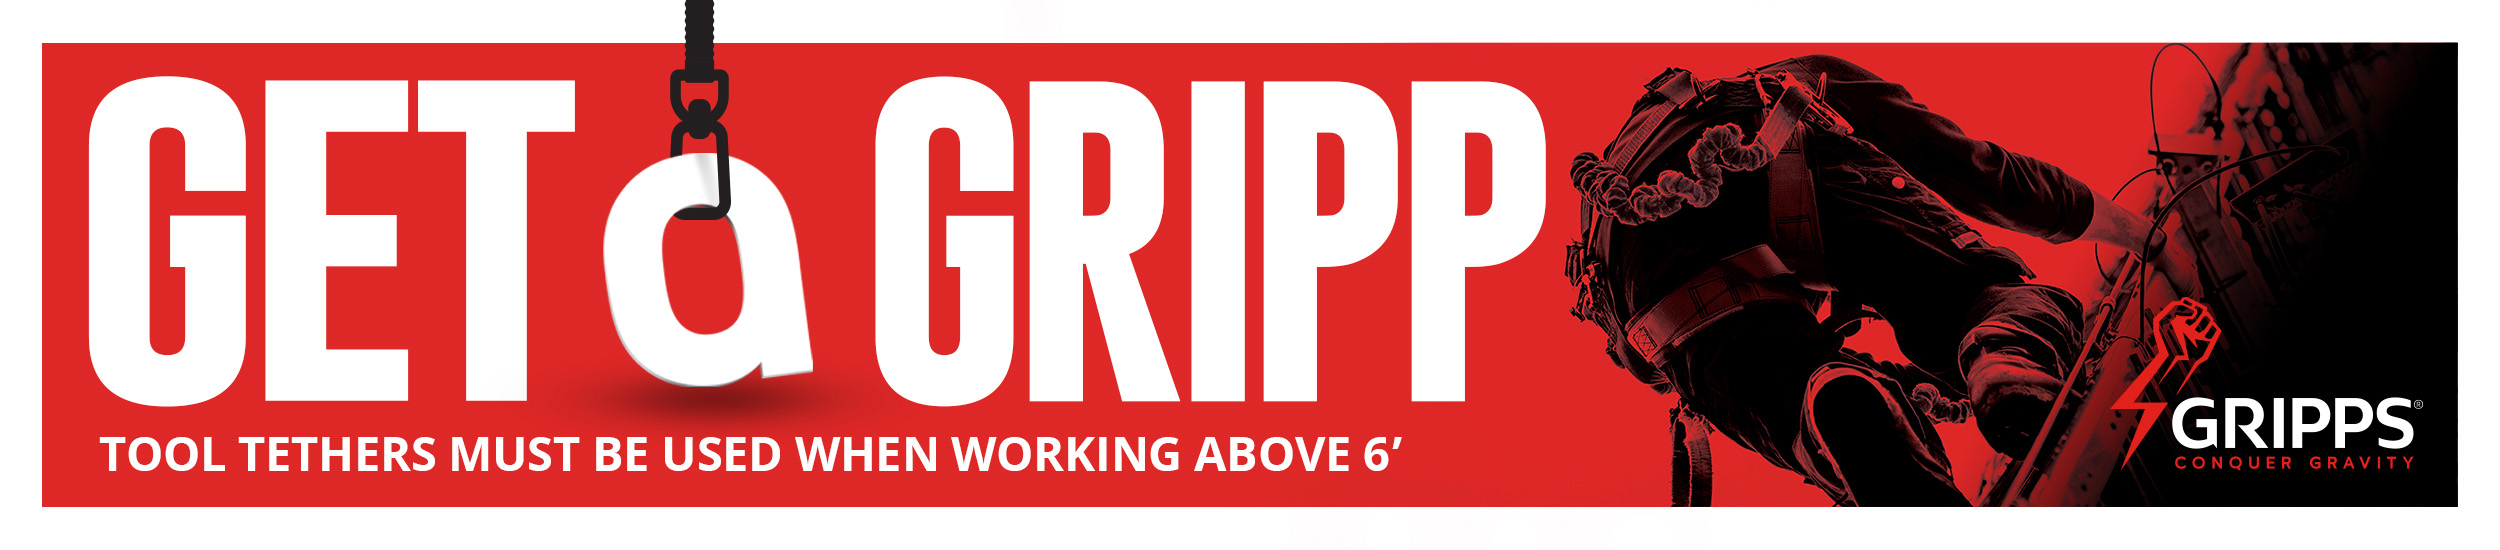 Get a GRIPP - Drop Prevention